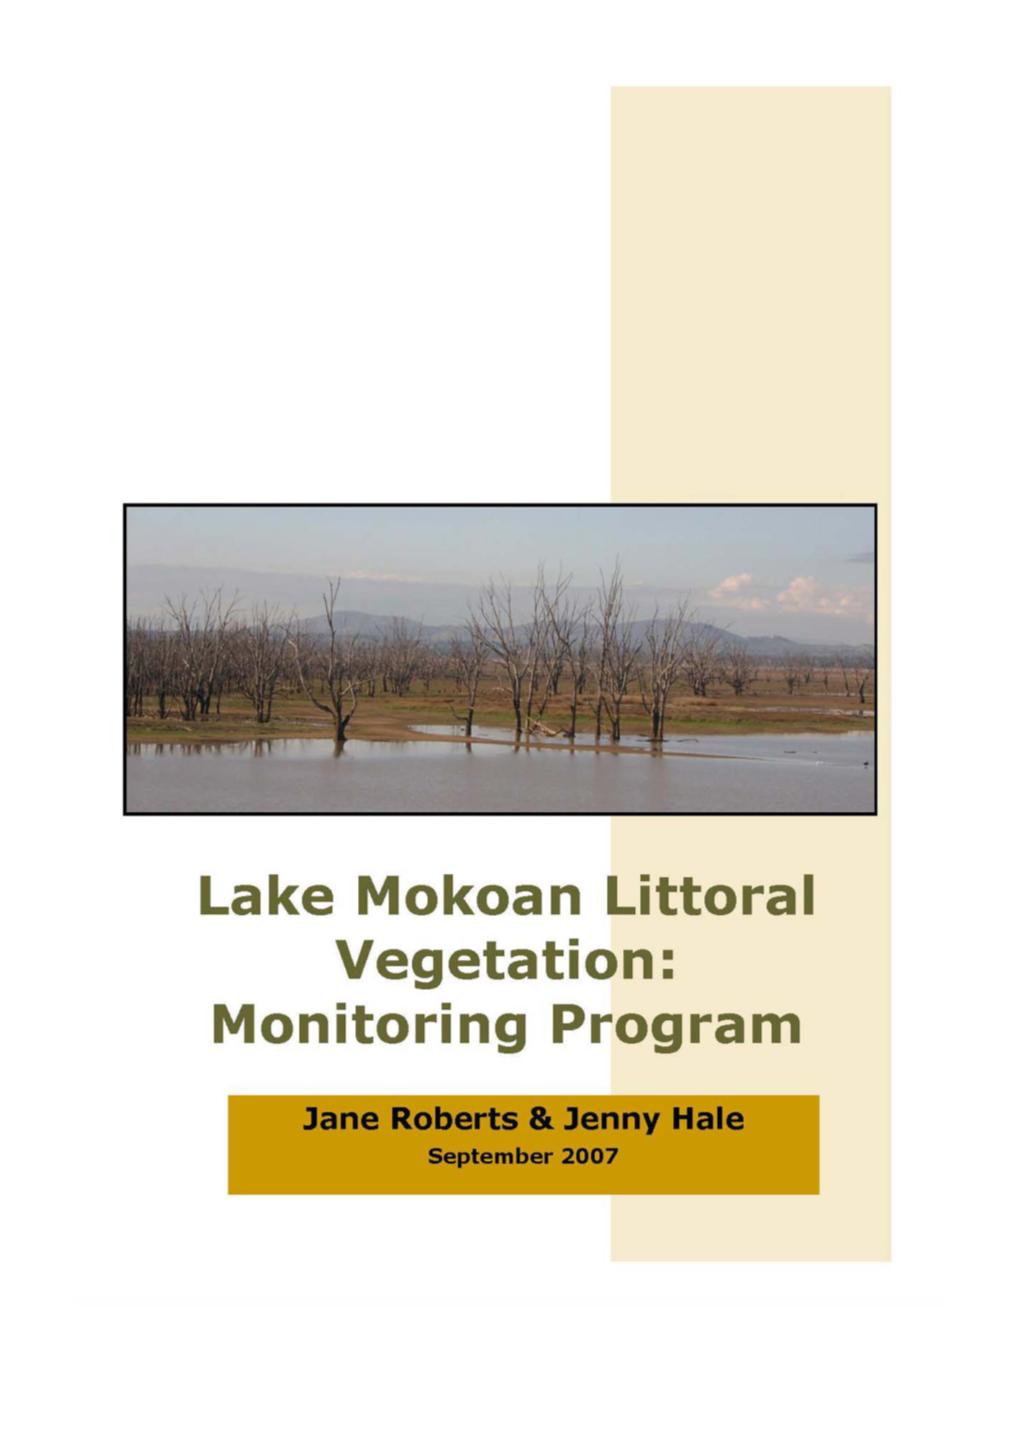 Lake Mokoan Littoral Vegetation: Monitoring Program